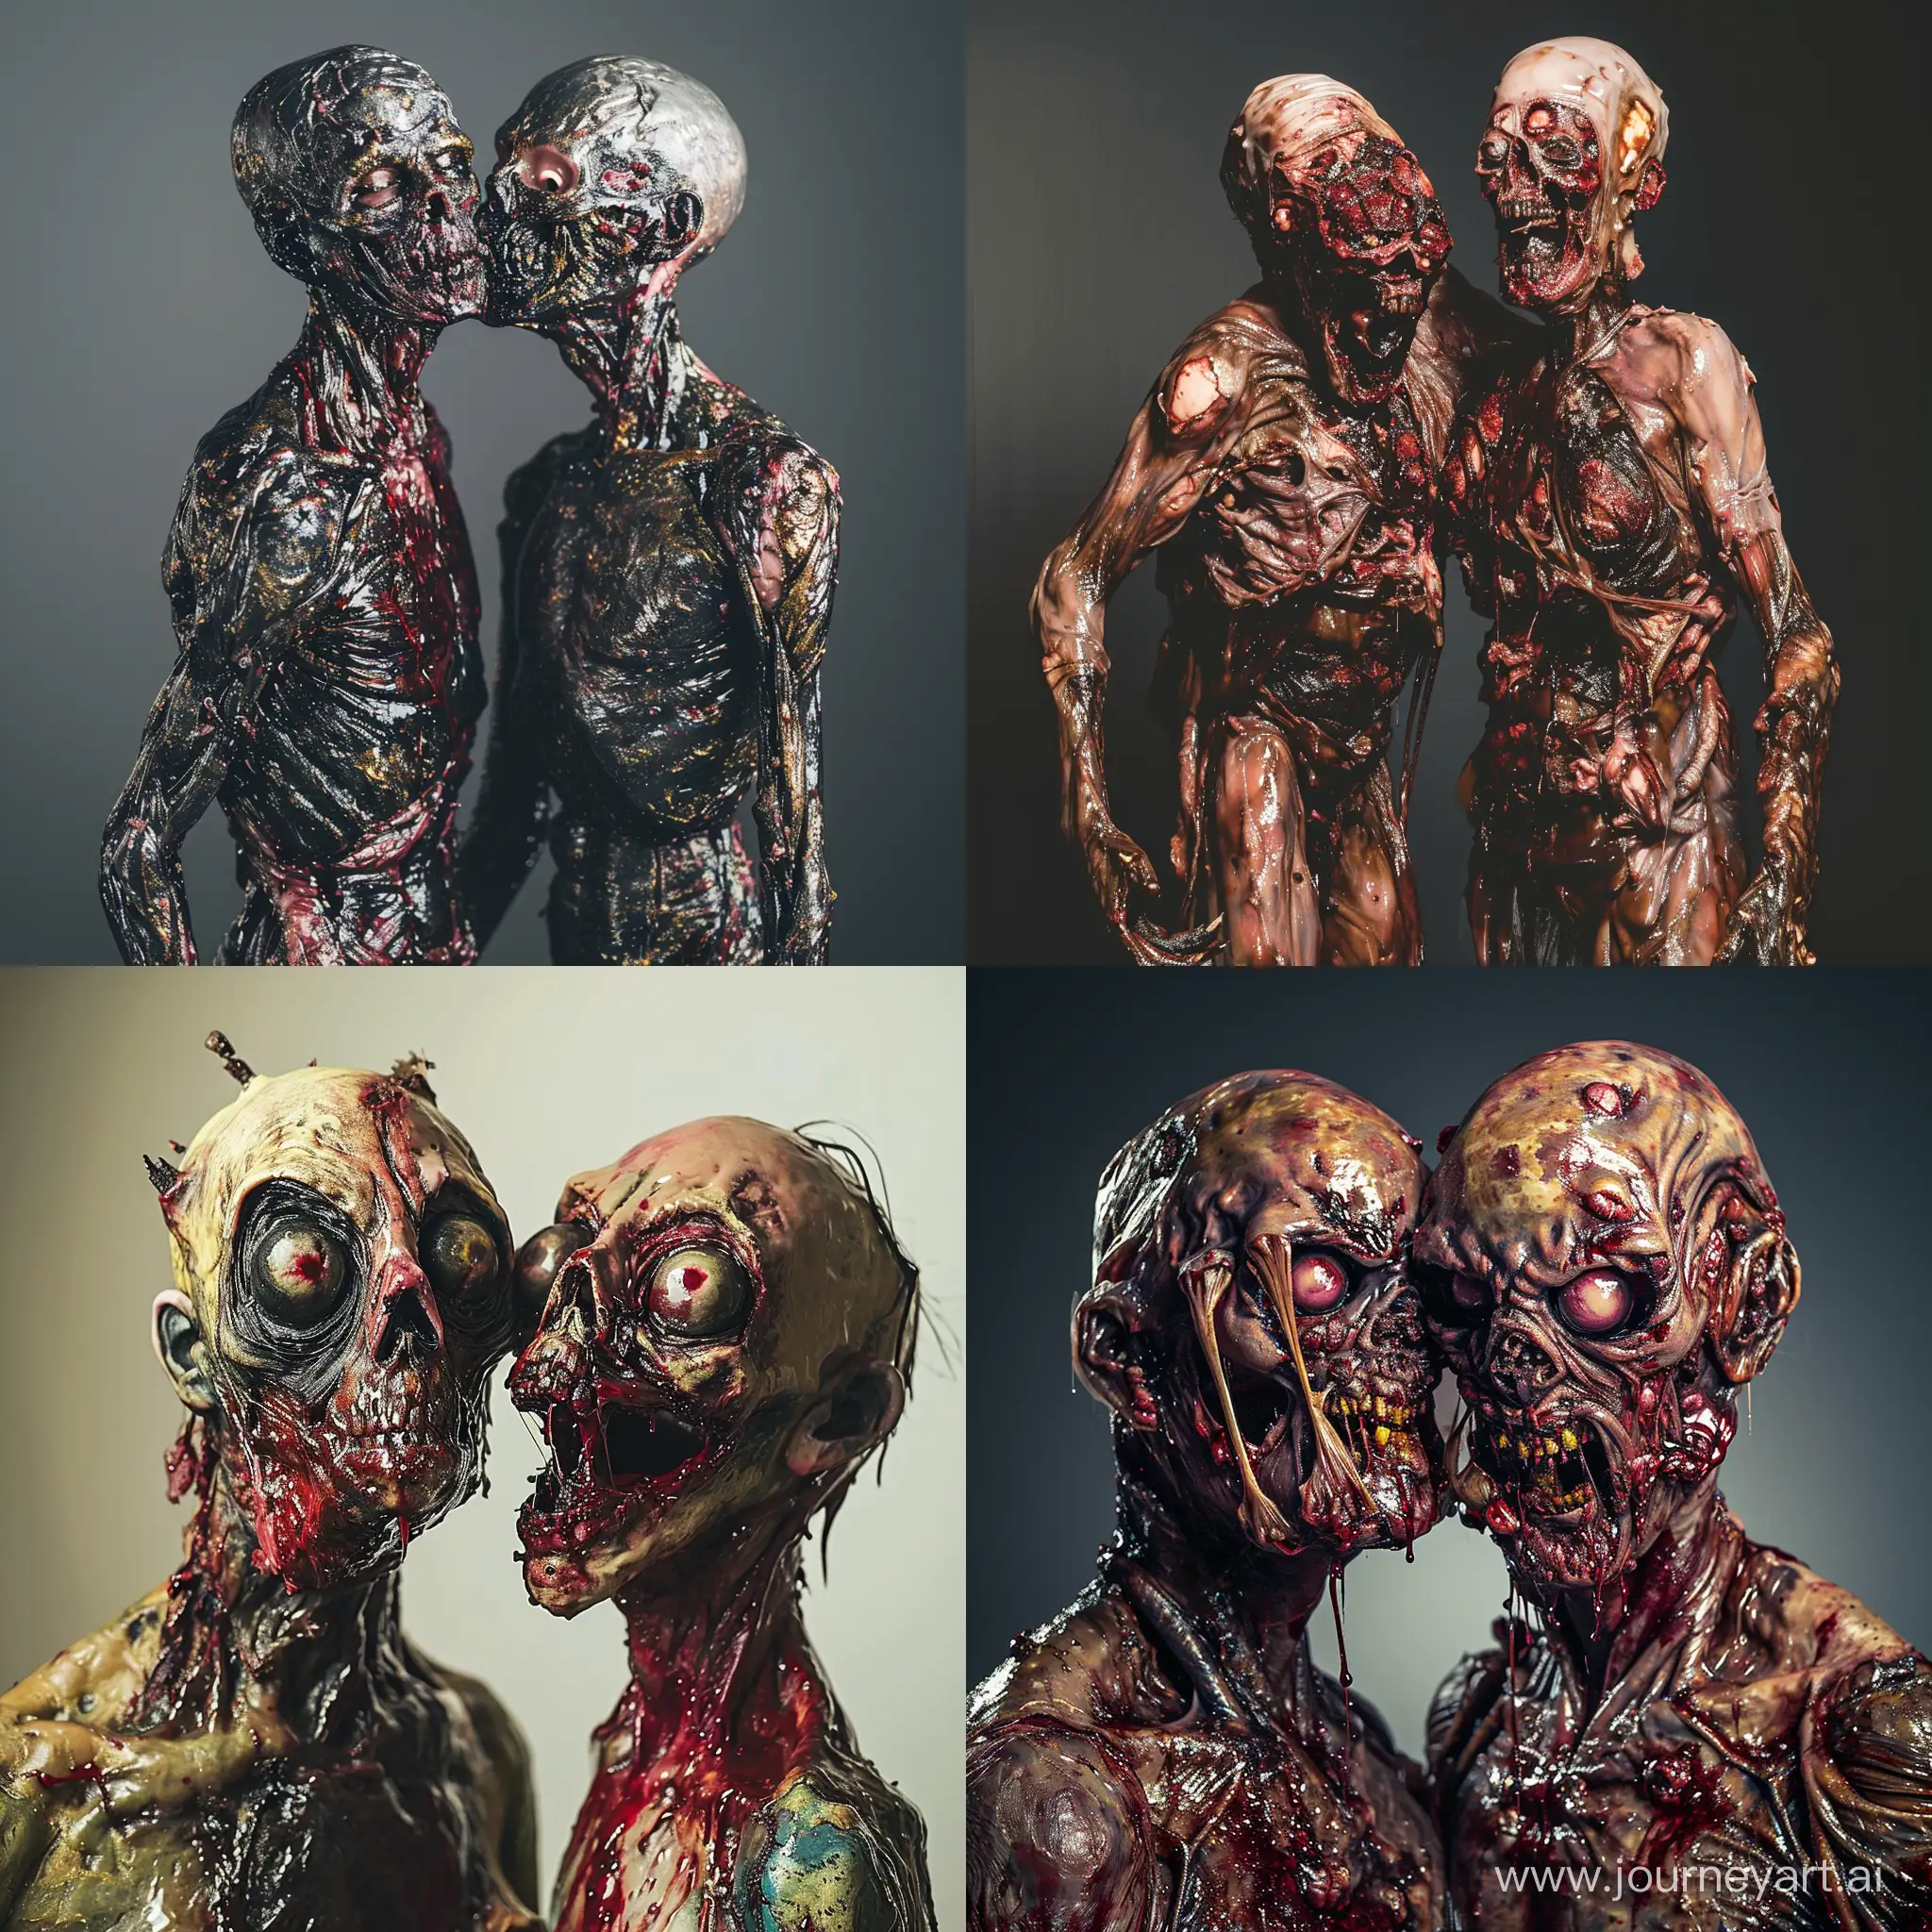 Monstrous-Cinematographic-Photoportrait-Terrifying-FleshMade-Creatures